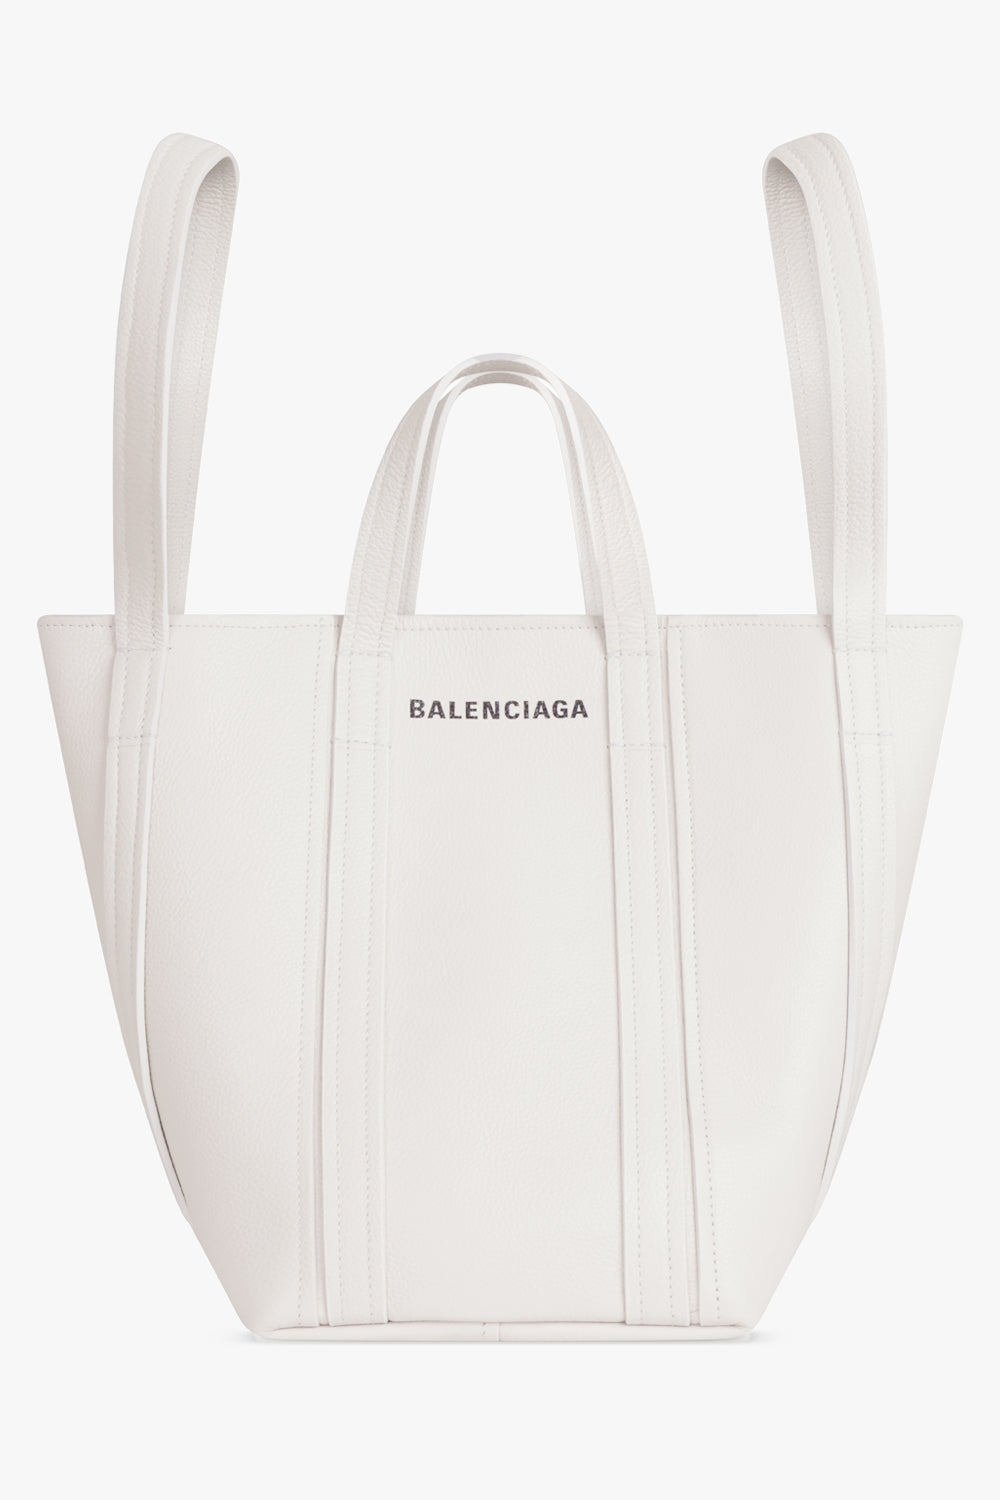 BALENCIAGA BAGS WHITE EVERYDAY 2.0 SMALL N/S SHOPPING TOTE | CHALKY WHITE